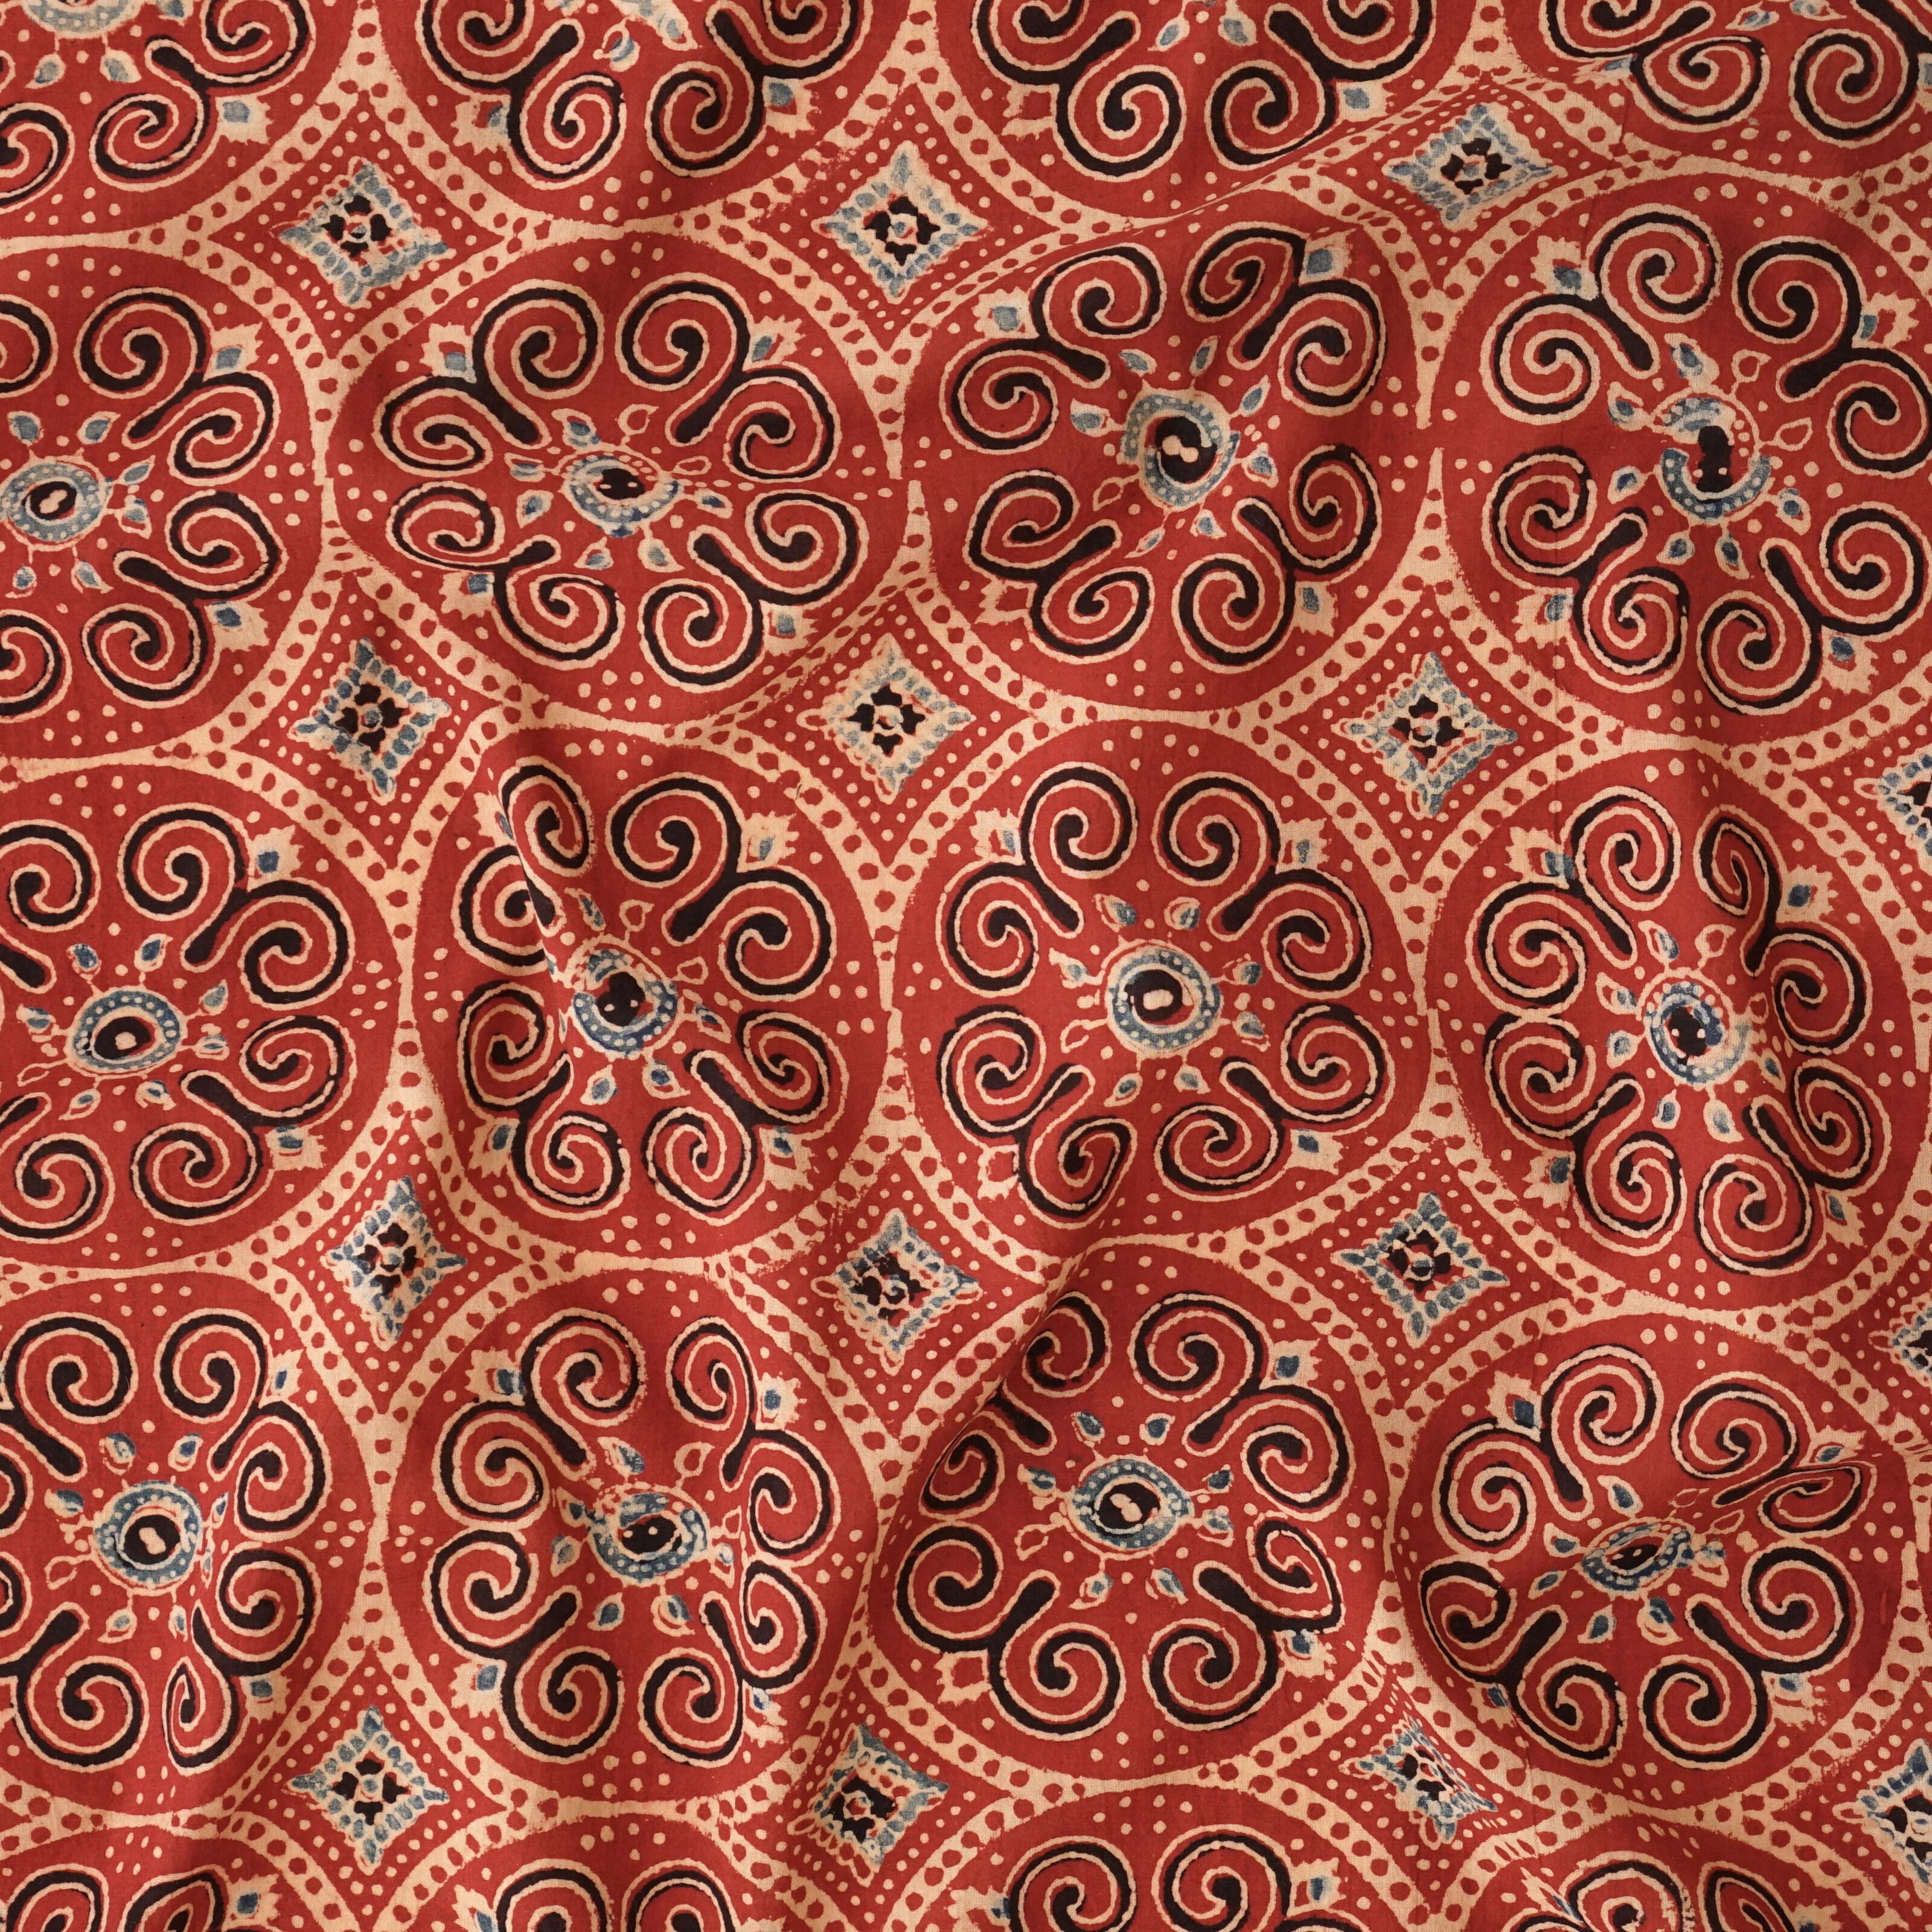 Traditional Ajrak Block-Printed Cotton - Ratatouille Print - Iron Black, Alizarin Red, Indigo - Contrast